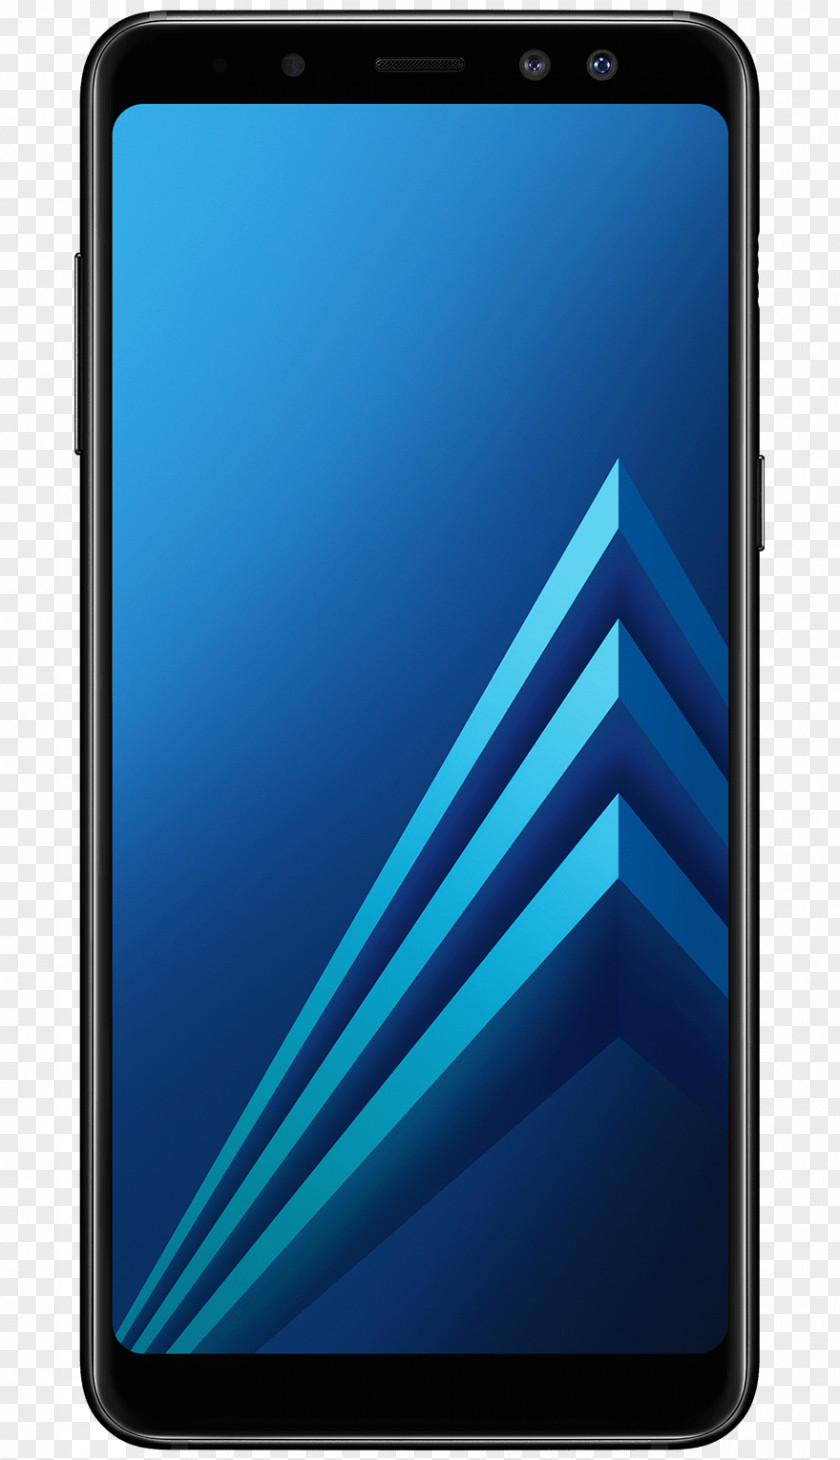 Samsung Galaxy A8 / A8+ S8 S9 PNG